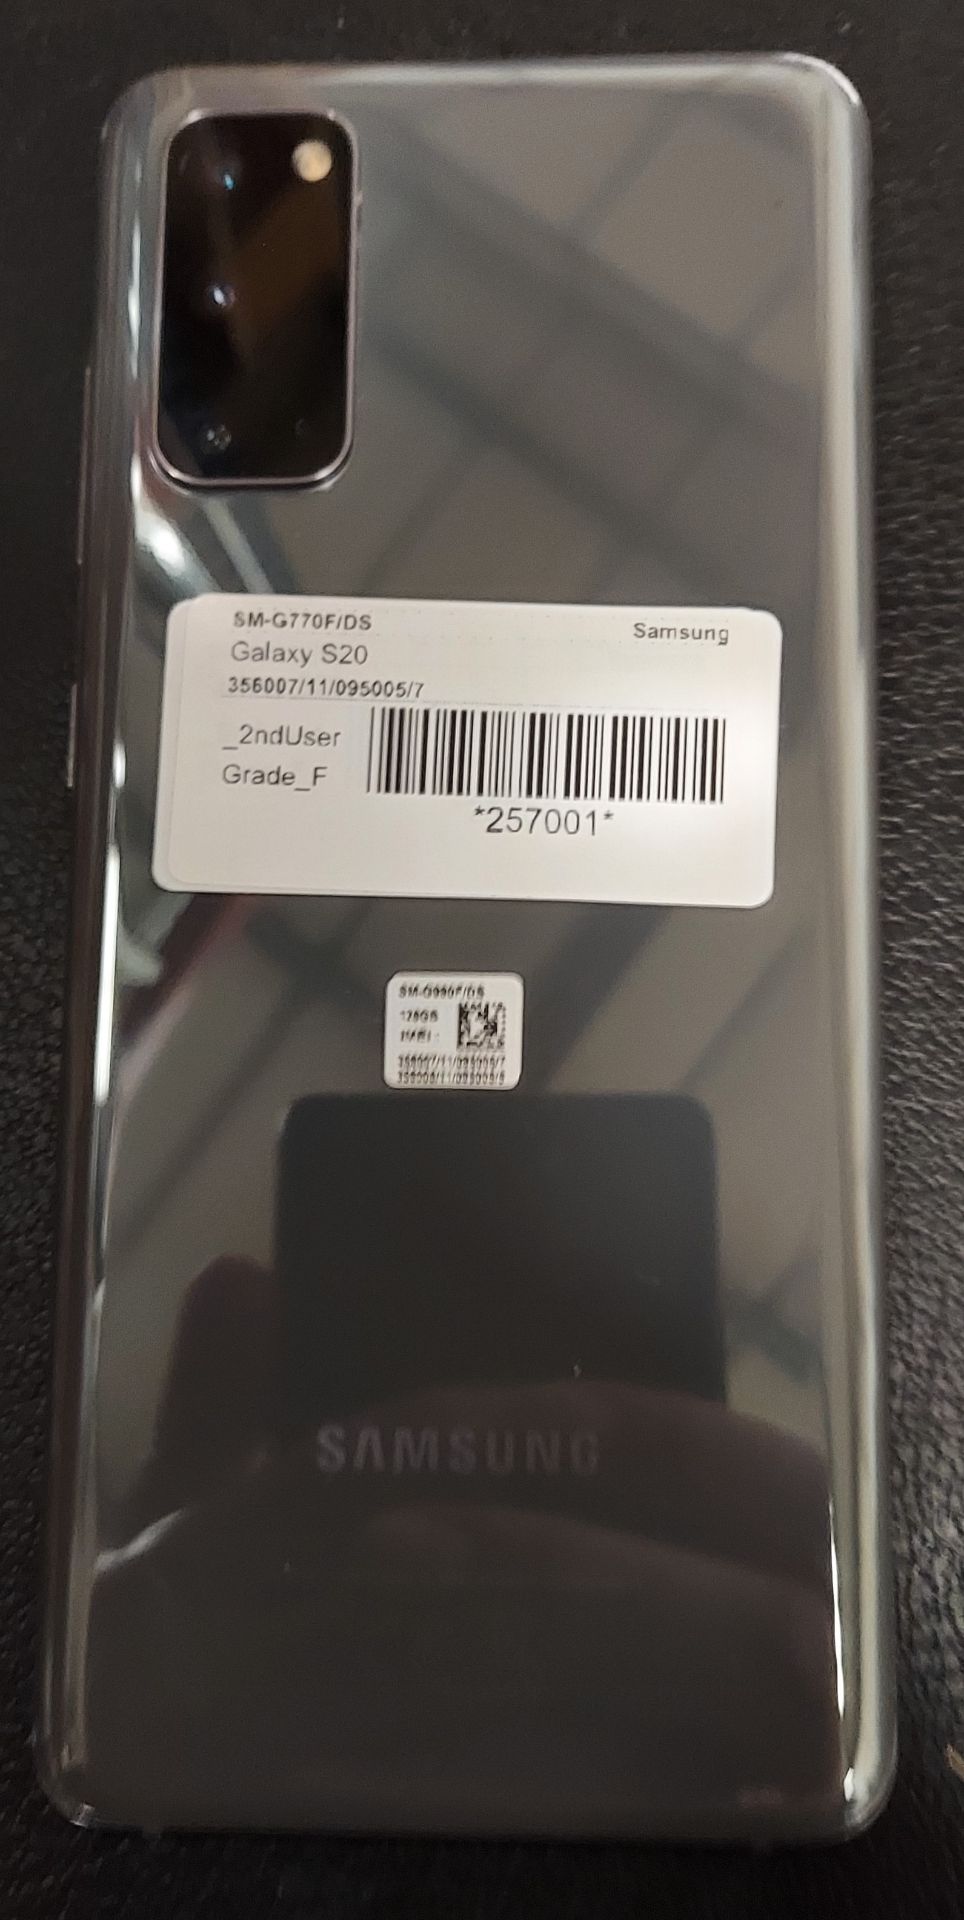 Samsung Galaxy Mobile Phone S20 Cosmic Grey - Image 6 of 6